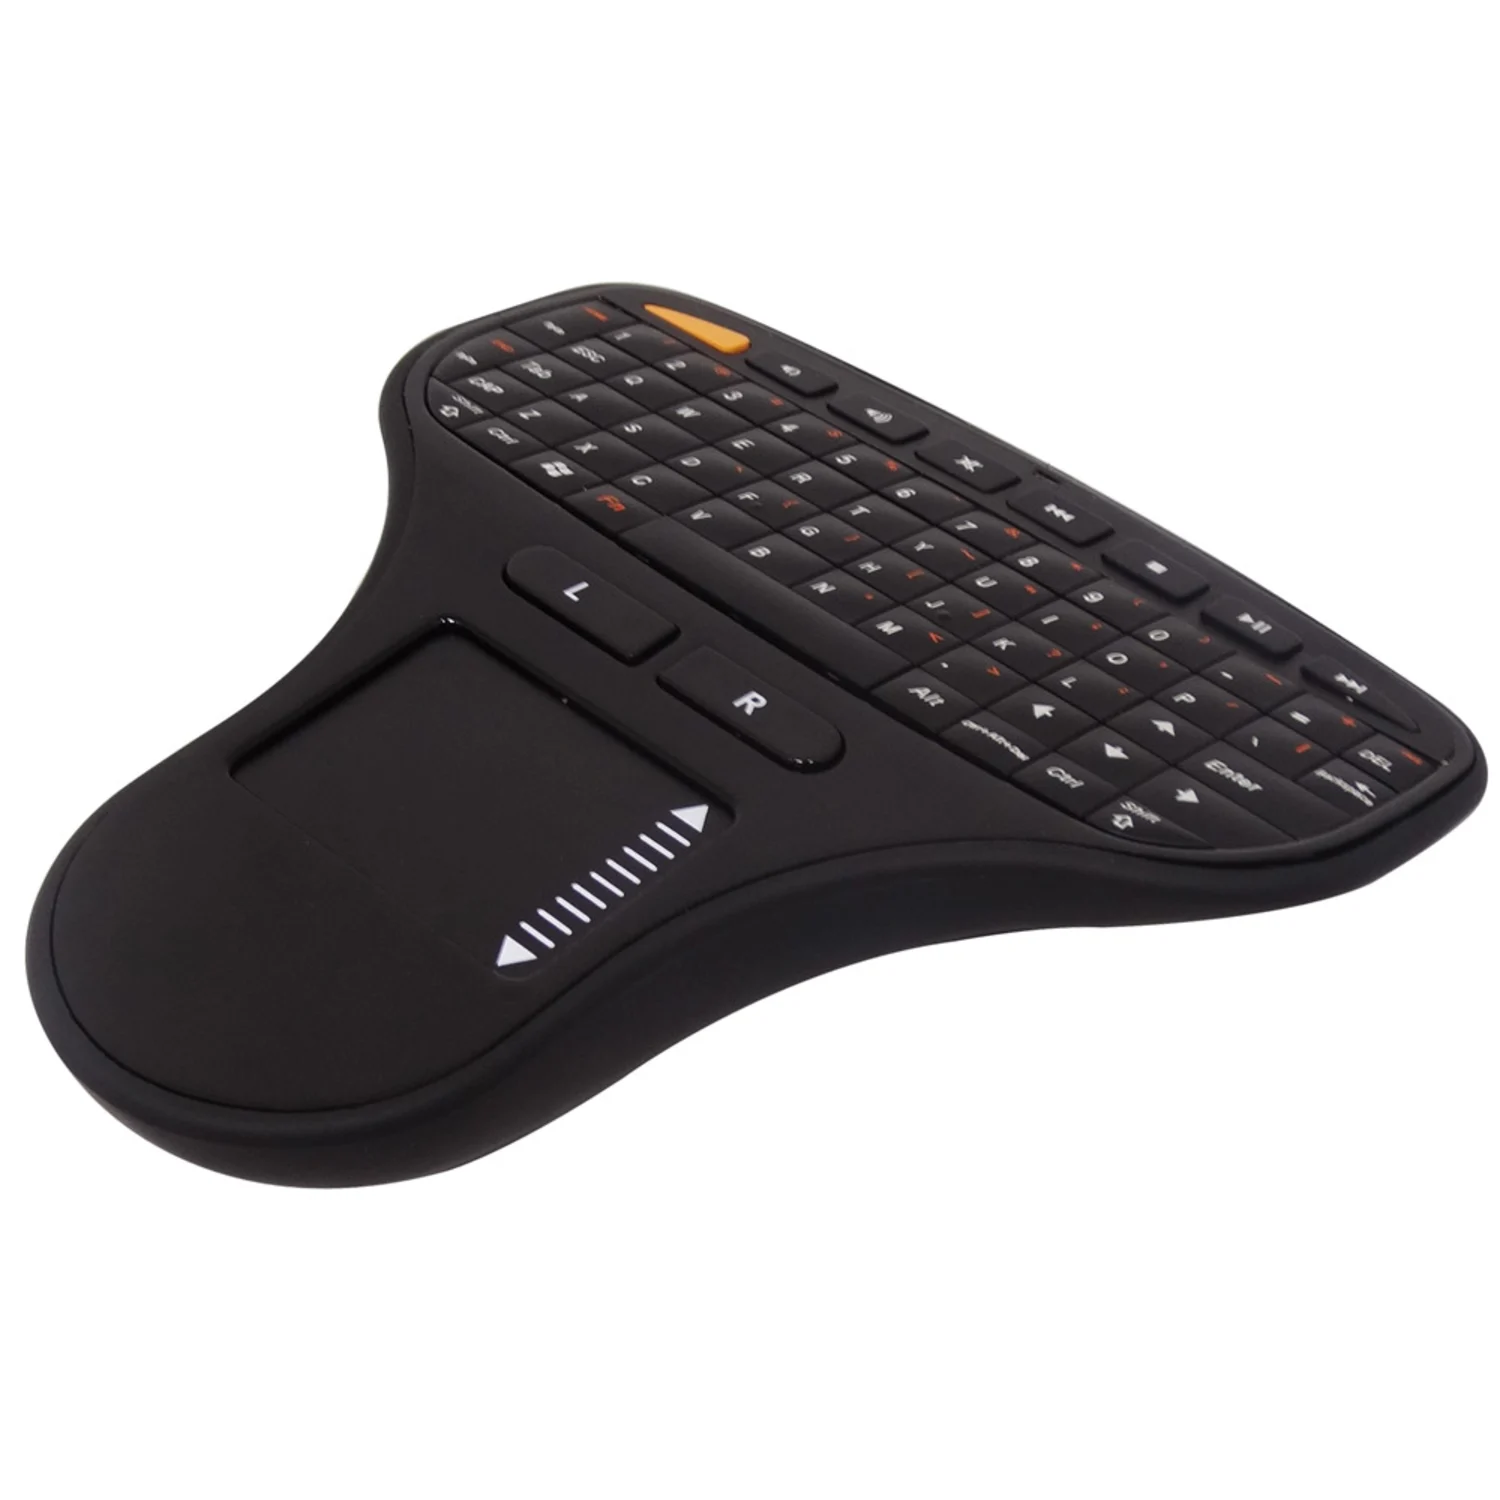 Controle Para Receptor Smart Remote Mini Wireless Keyboard N5903 - Preto